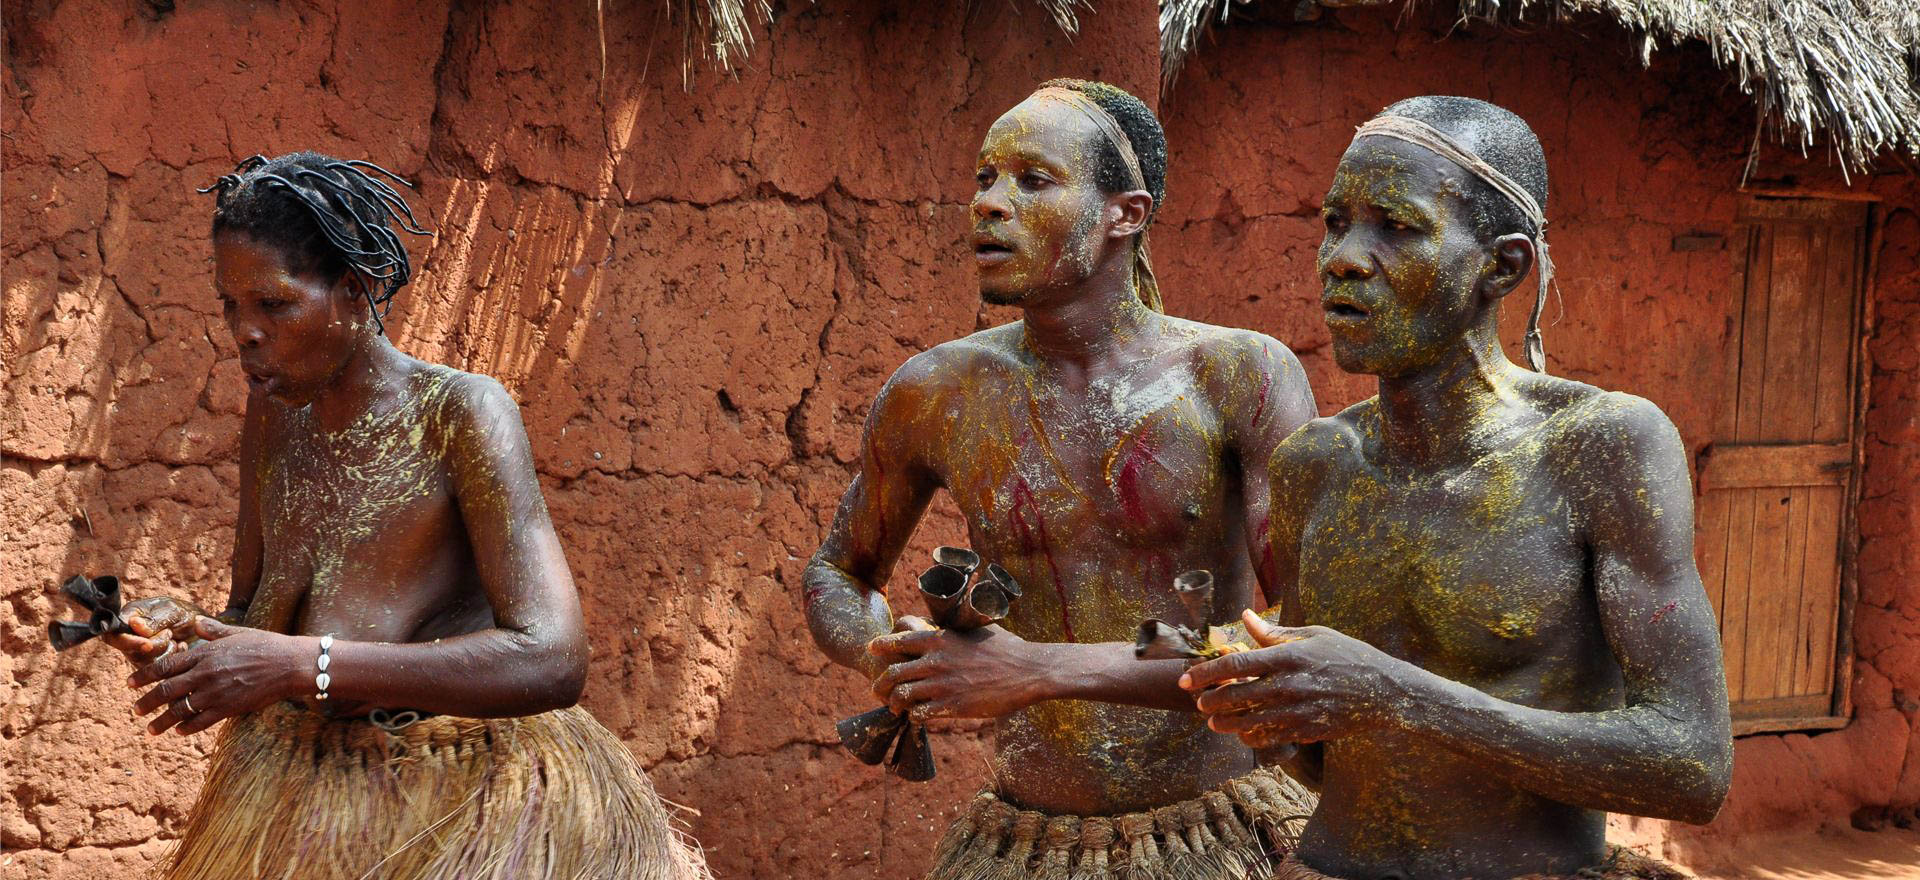 Voodoo ceremony - Benin holidays